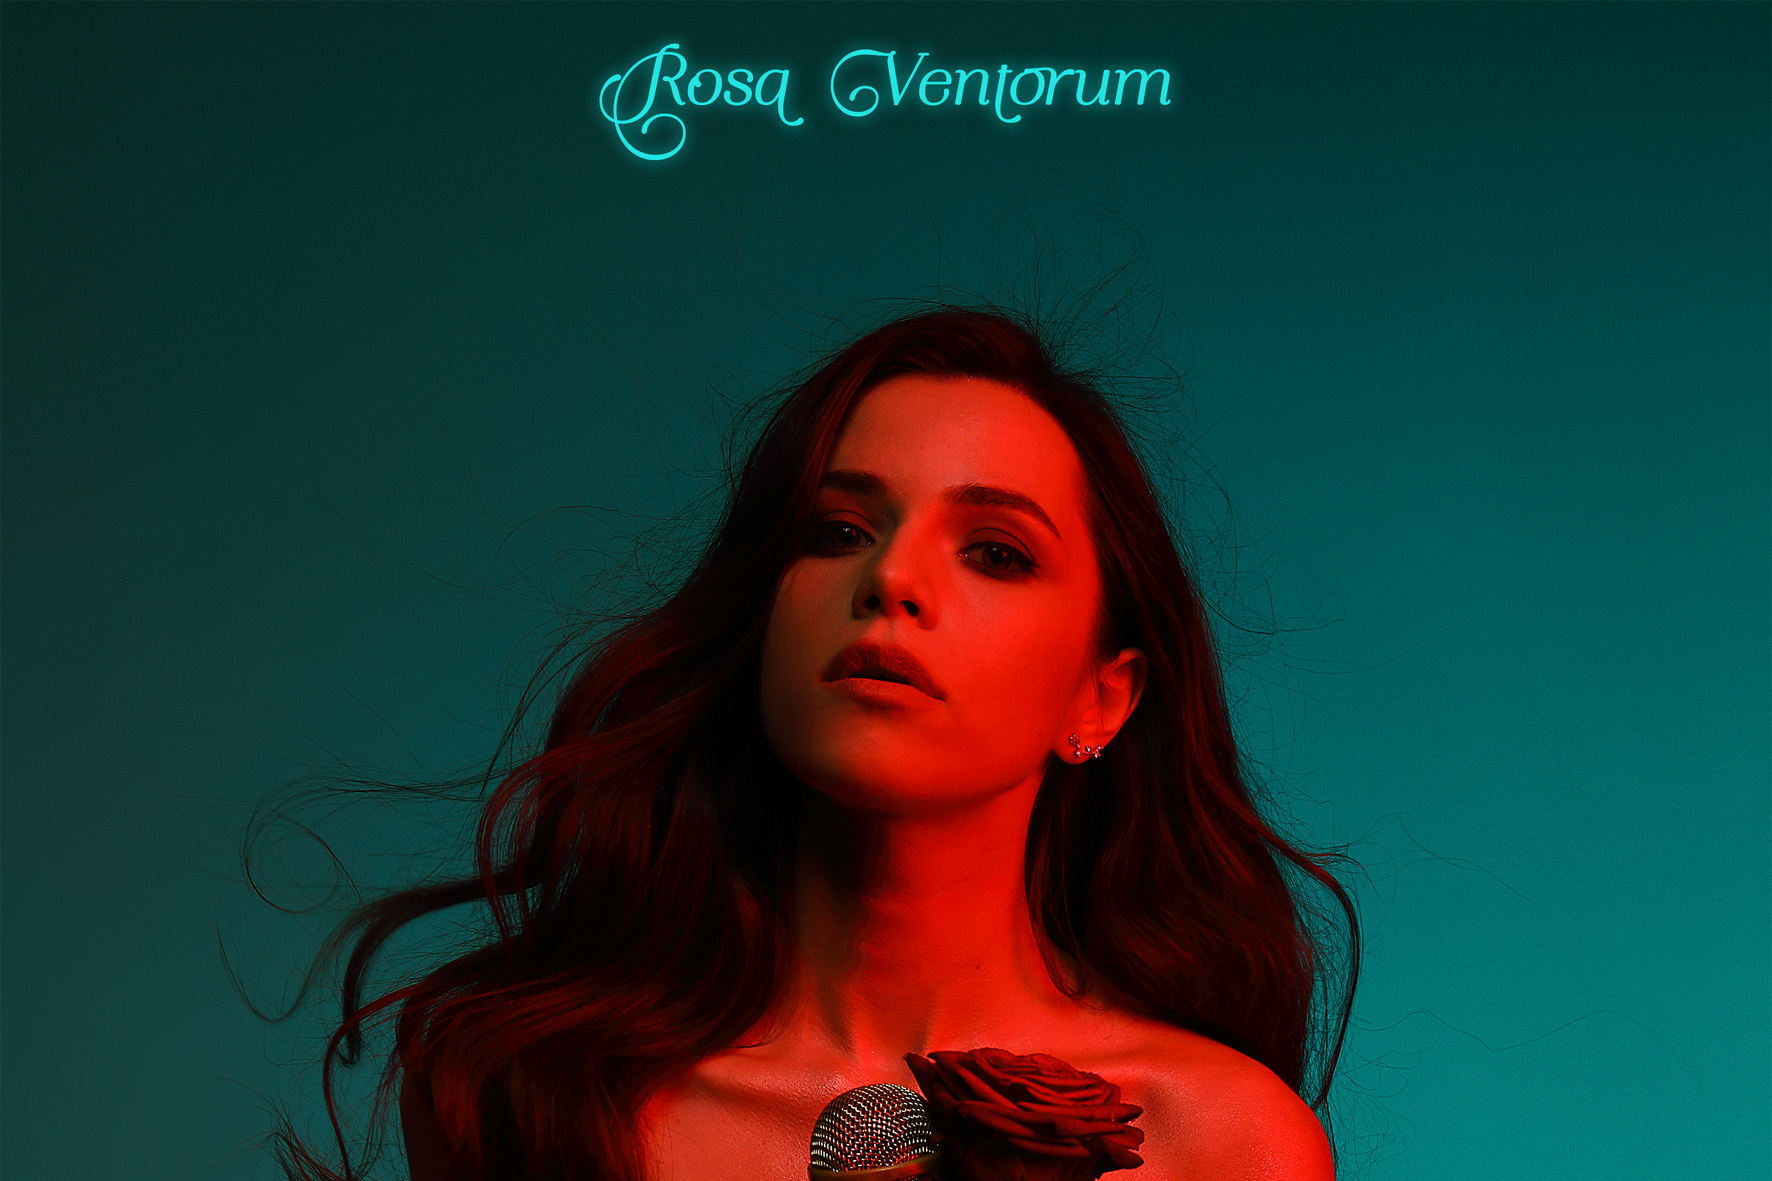 Христина Соловій випустила перший за три роки альбом “Rosa Ventorum”